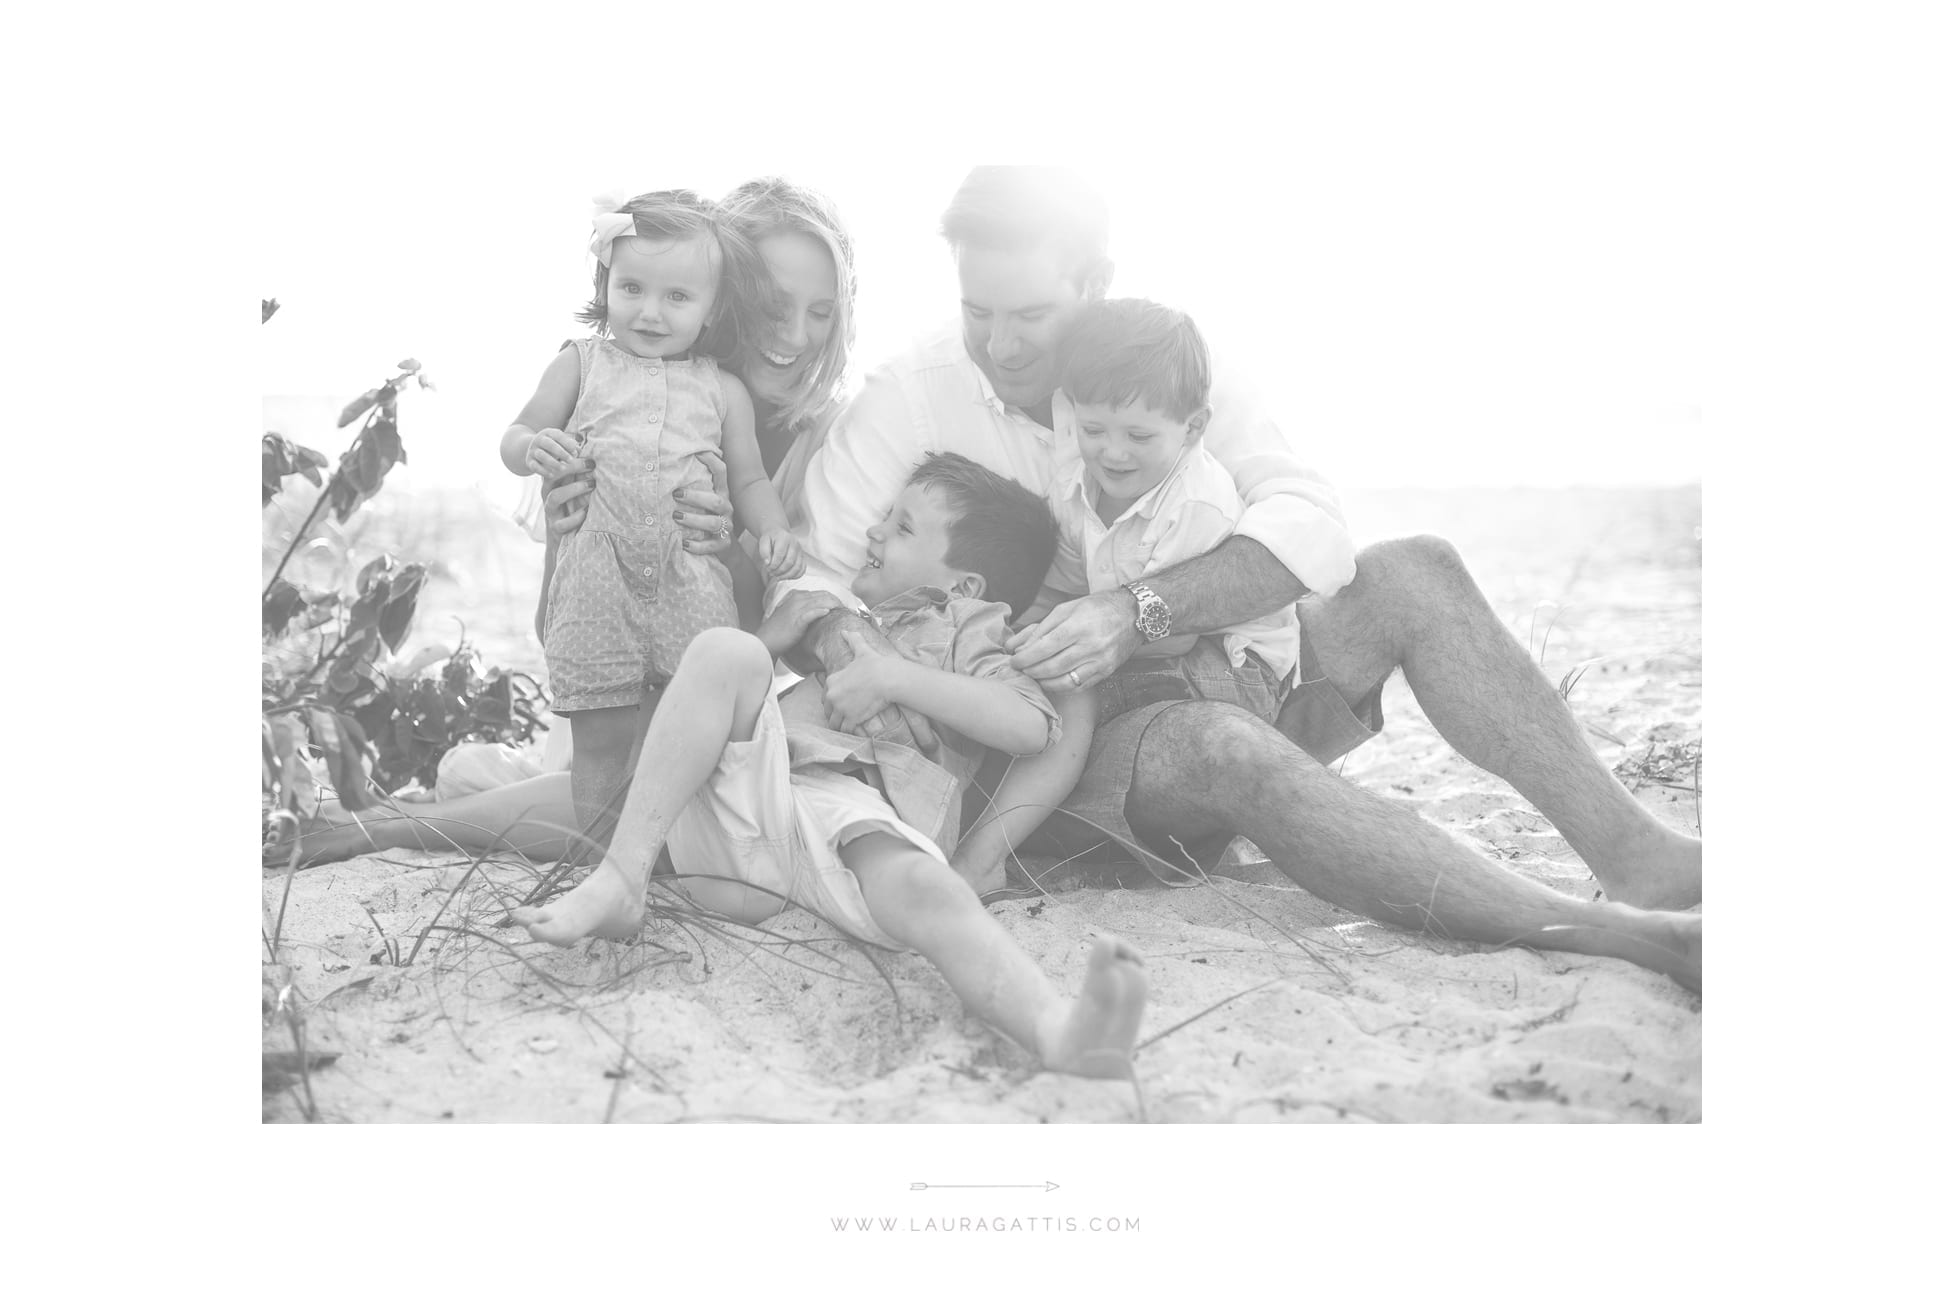 natural light family beach photo session | laura gattis photography